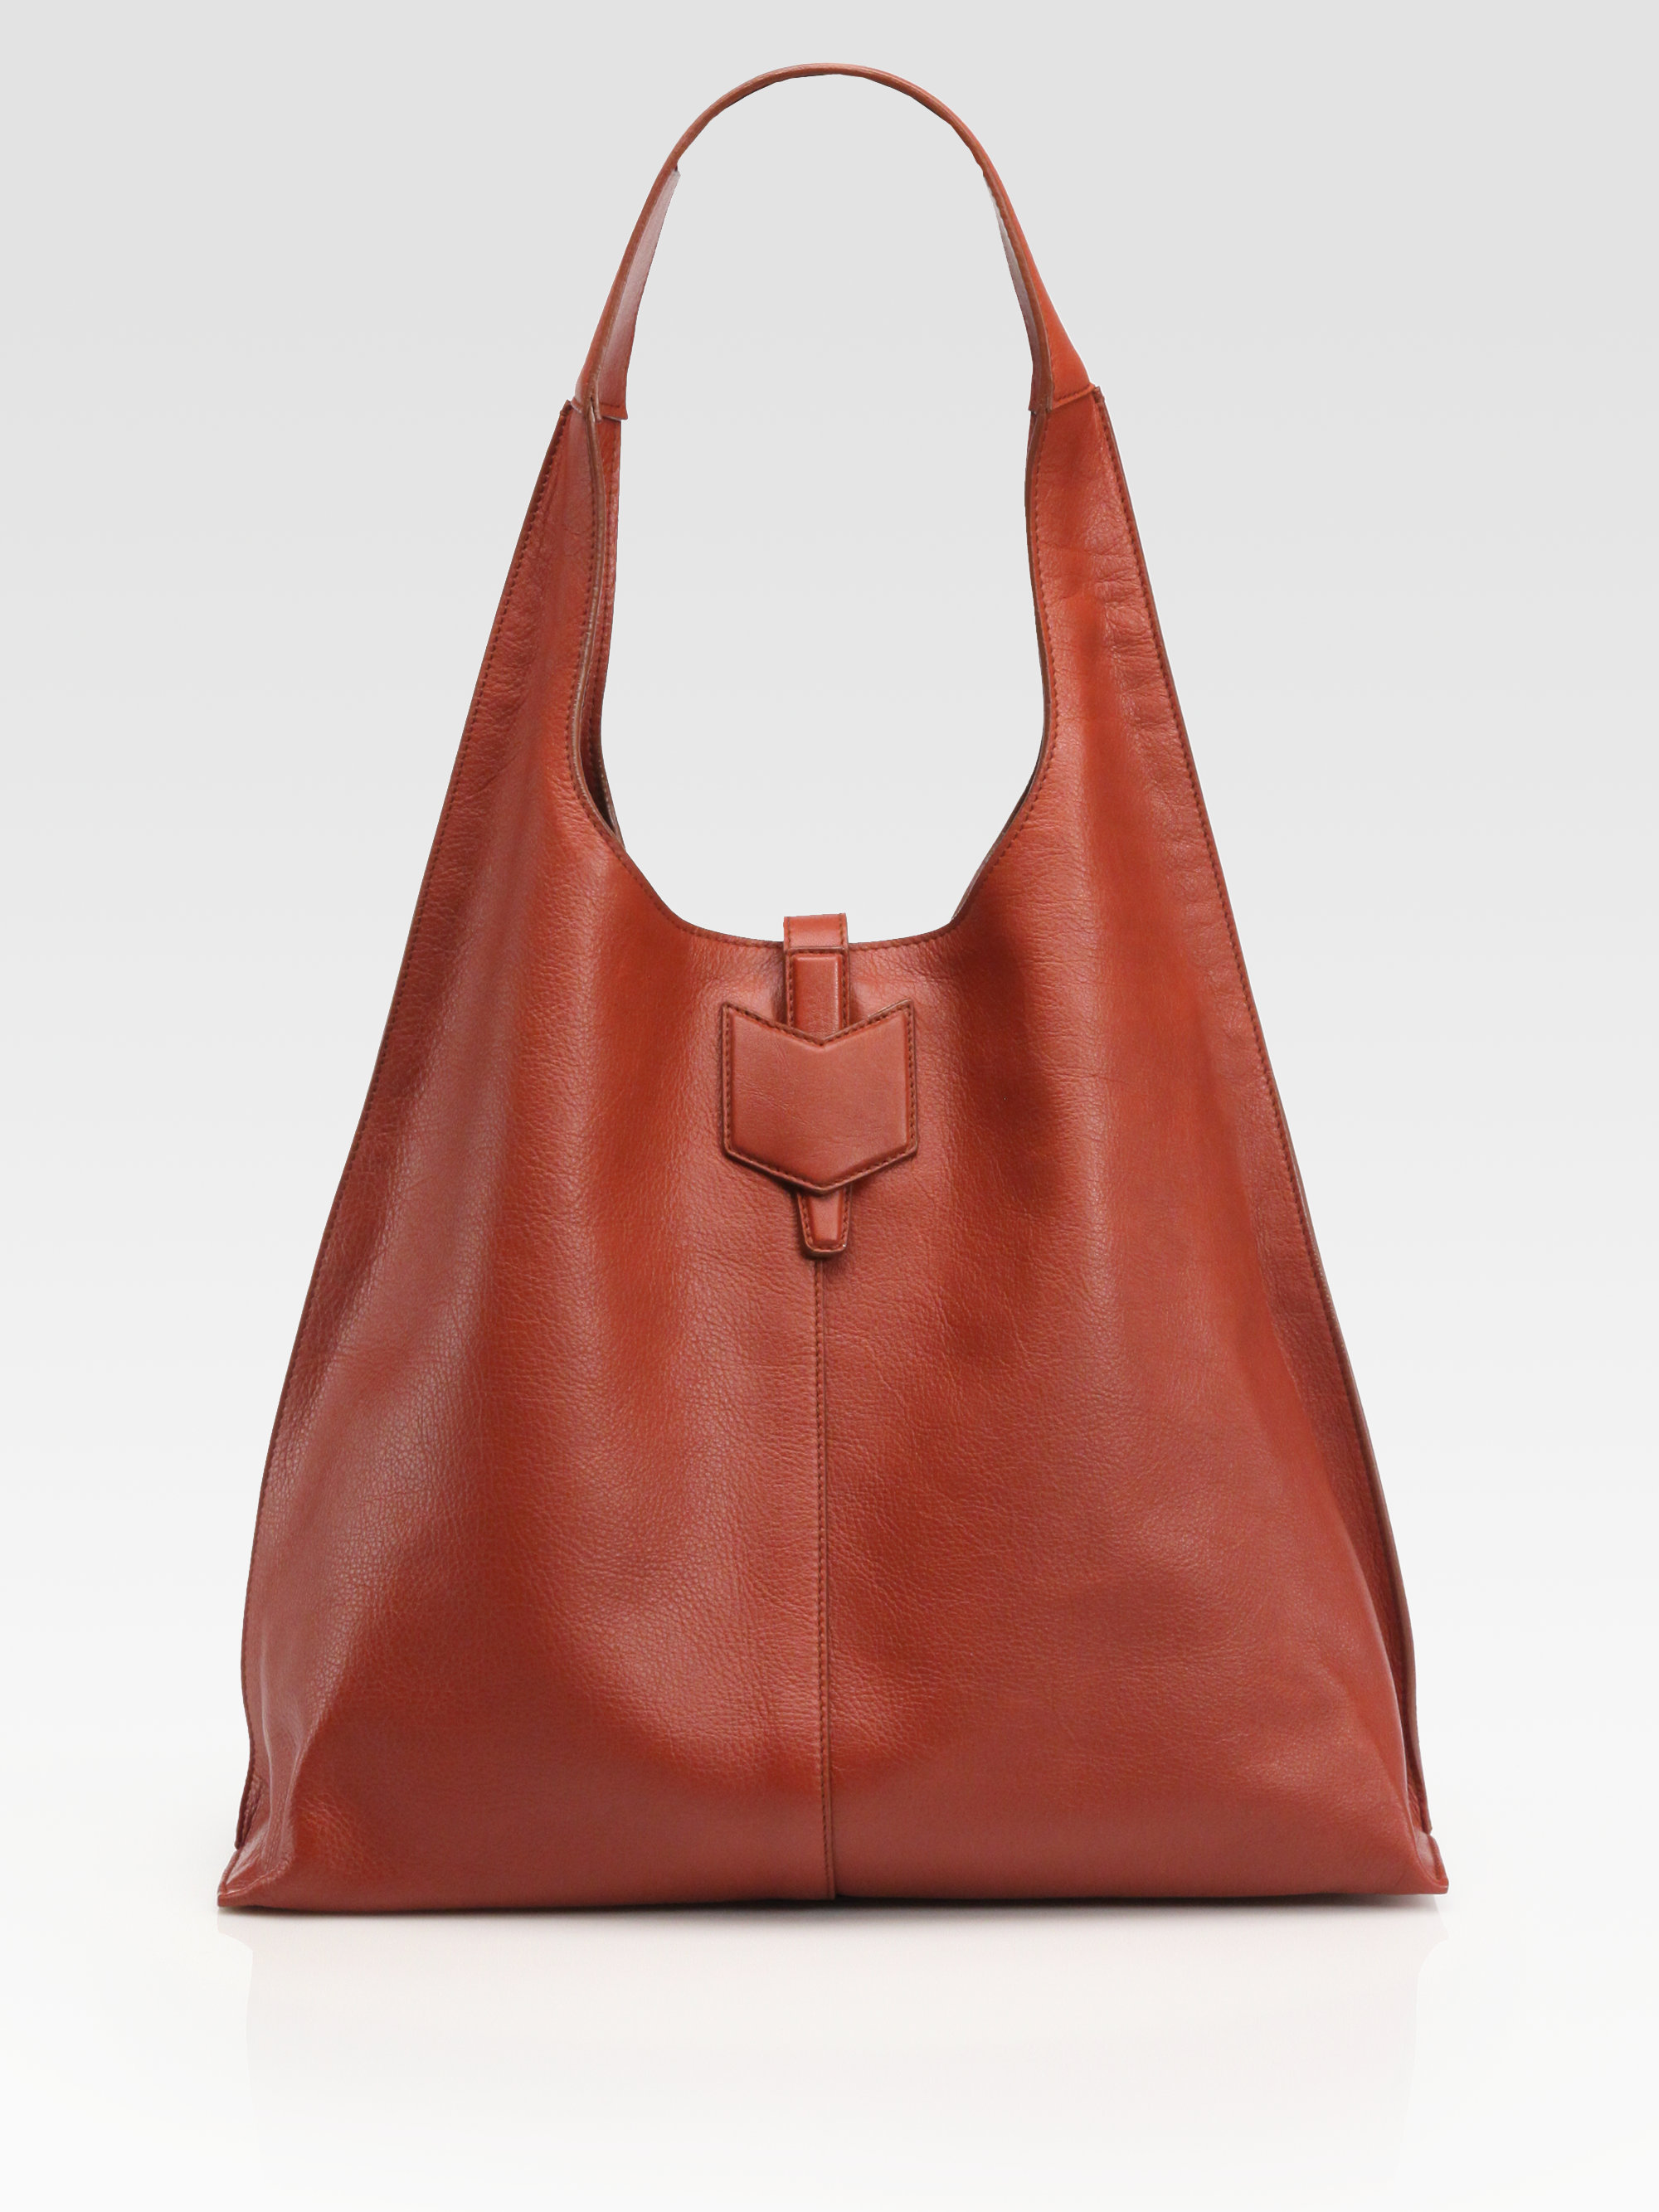 yves-saint-laurent-black-ysl-leather-hobo-bag-product-1-8059949-643285127.jpeg  